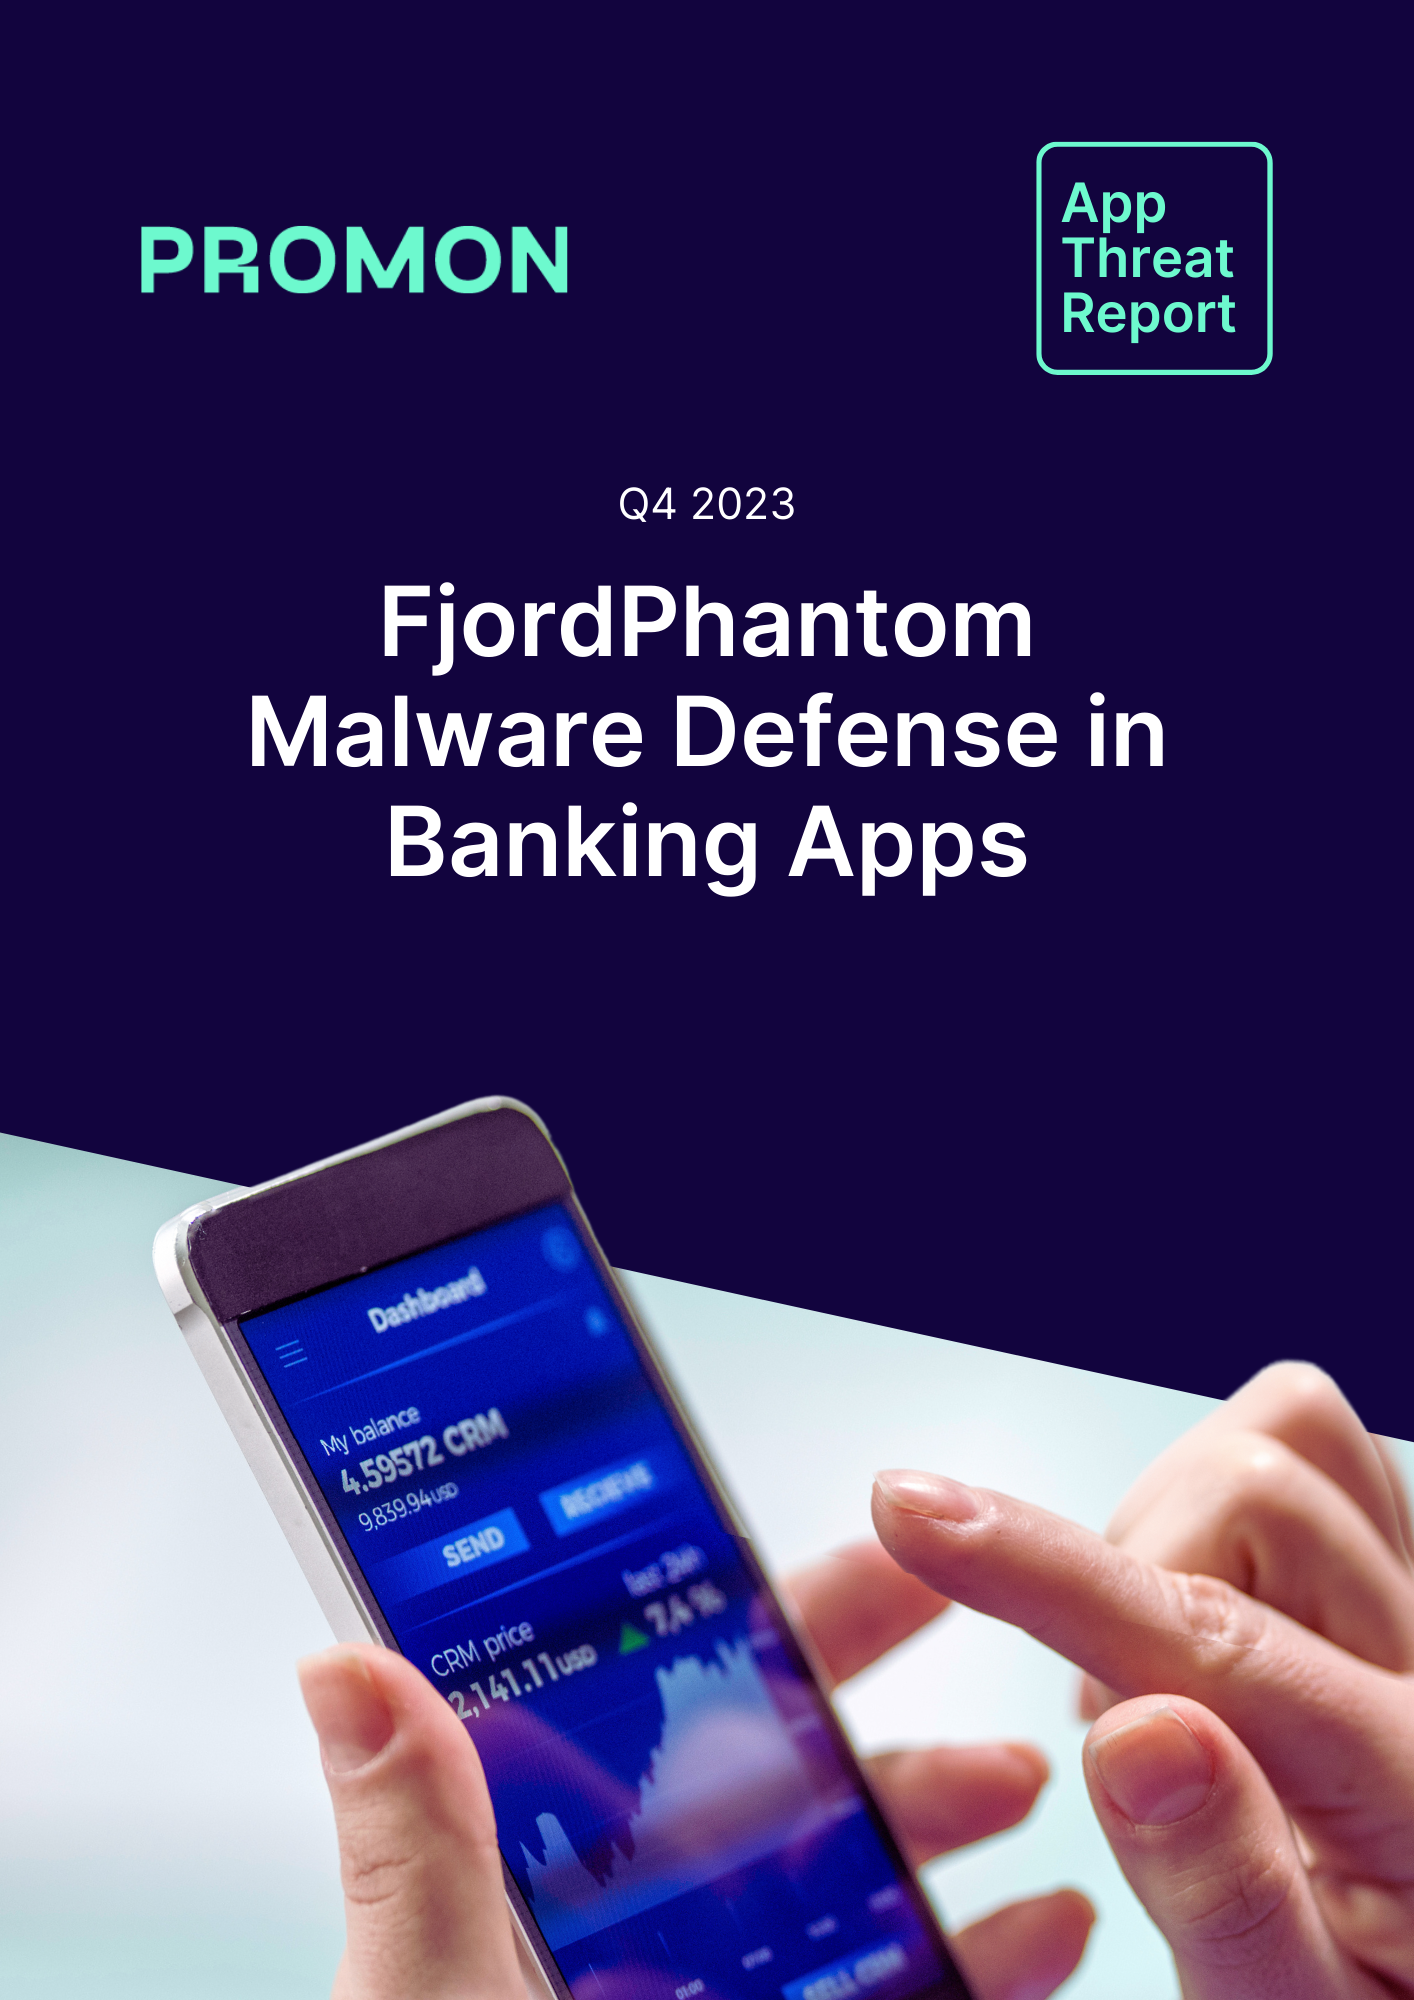 FjordPhantom Malware Defense in Banking Apps